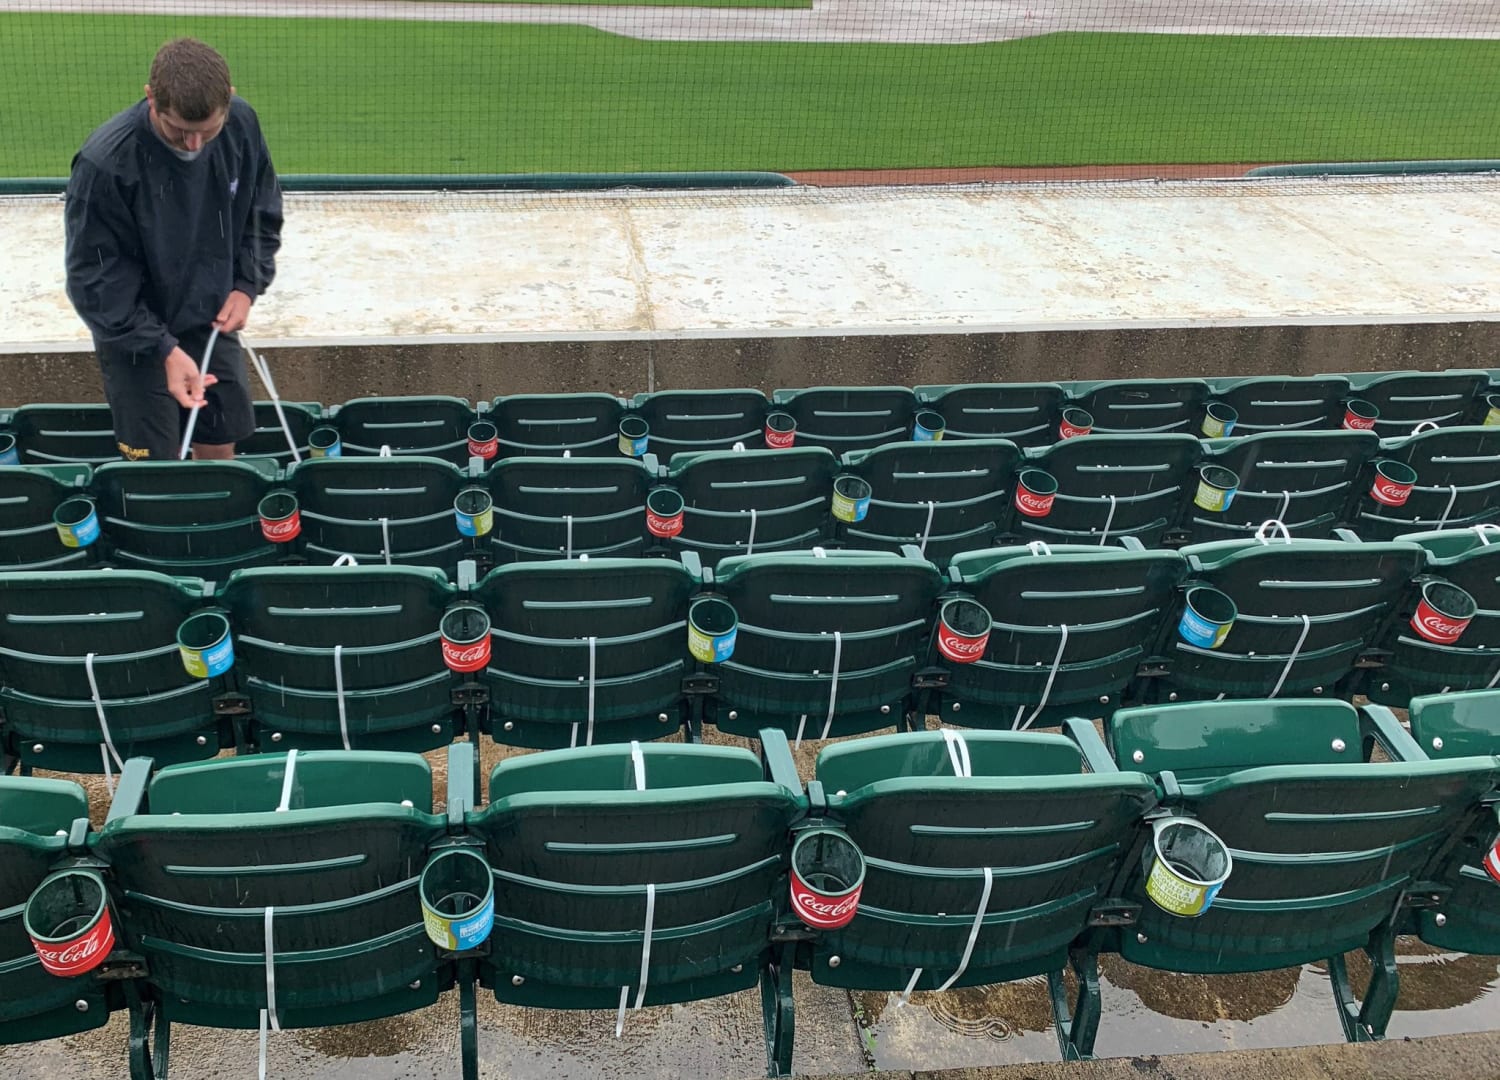 Benching COVID: Baseball fans return to California stadiums